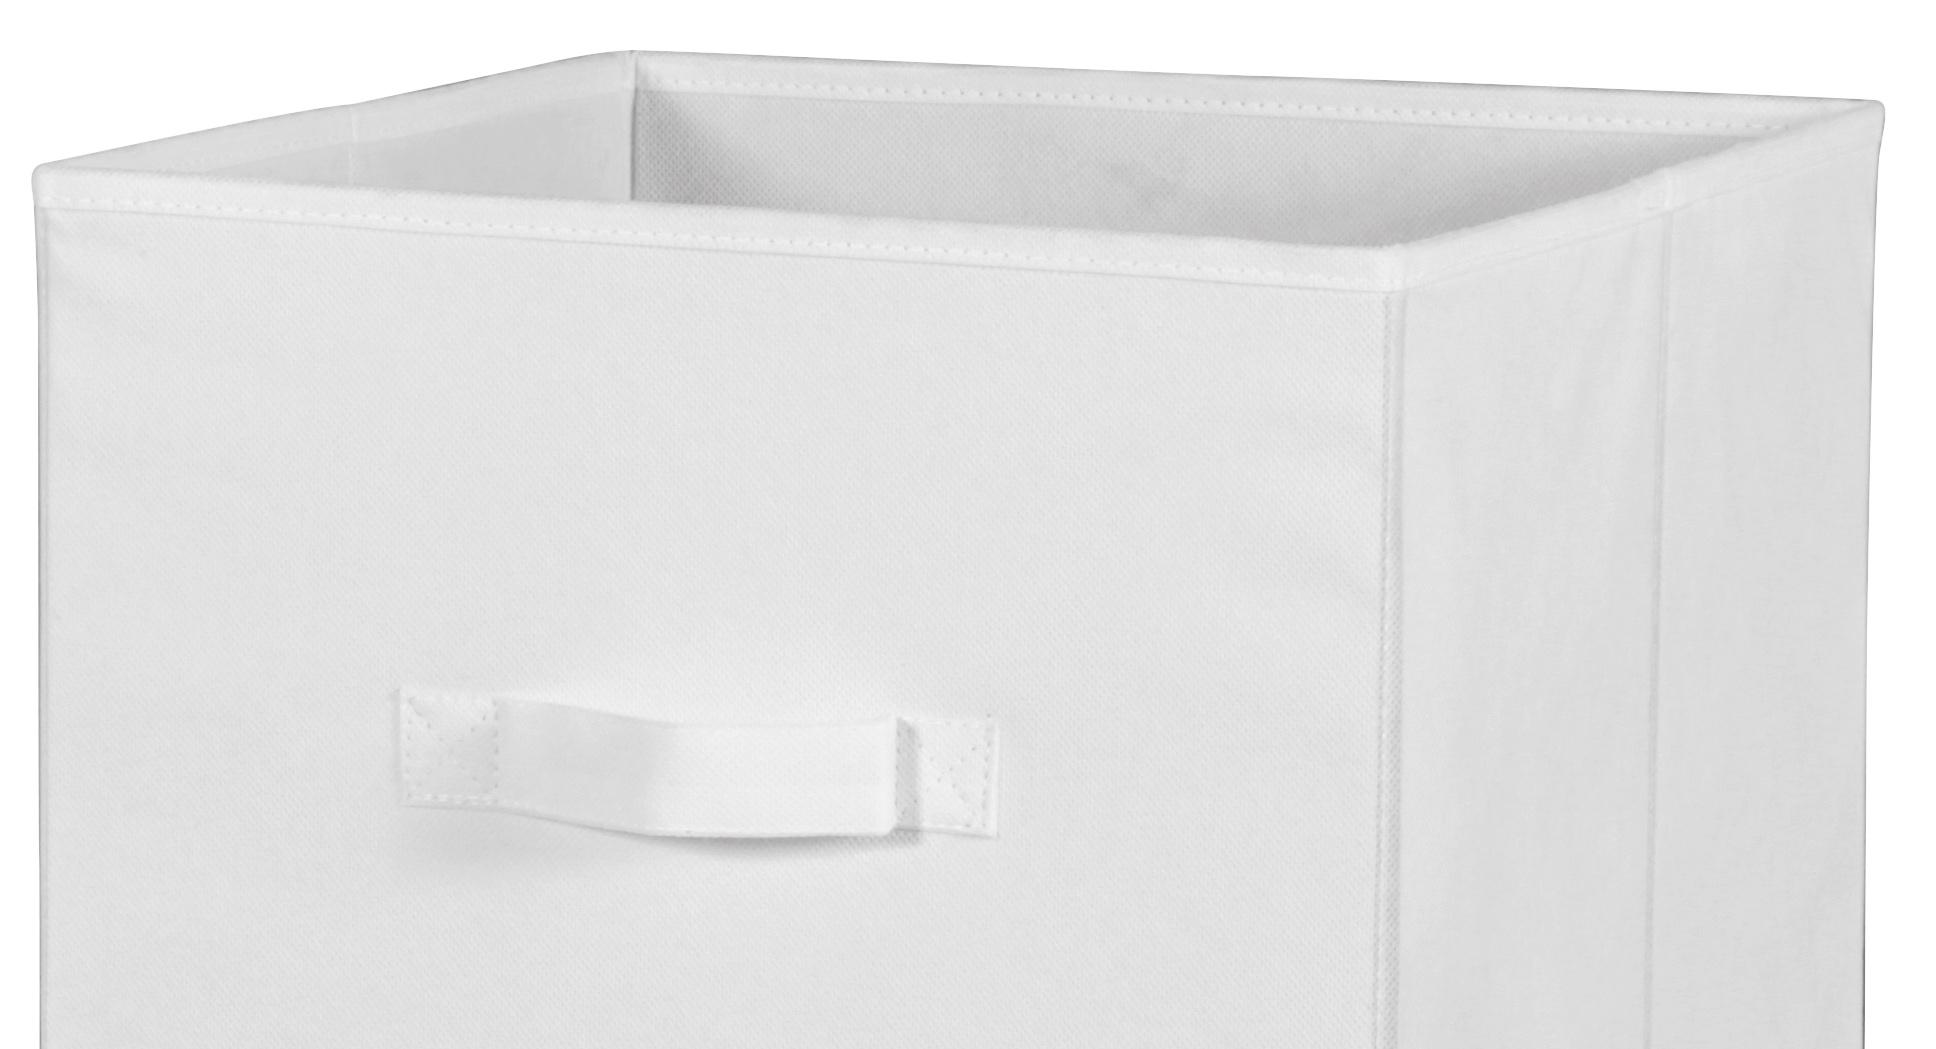 Skládací Krabice Cliff 3 - bílá, Moderní, textil (32/32/32cm)